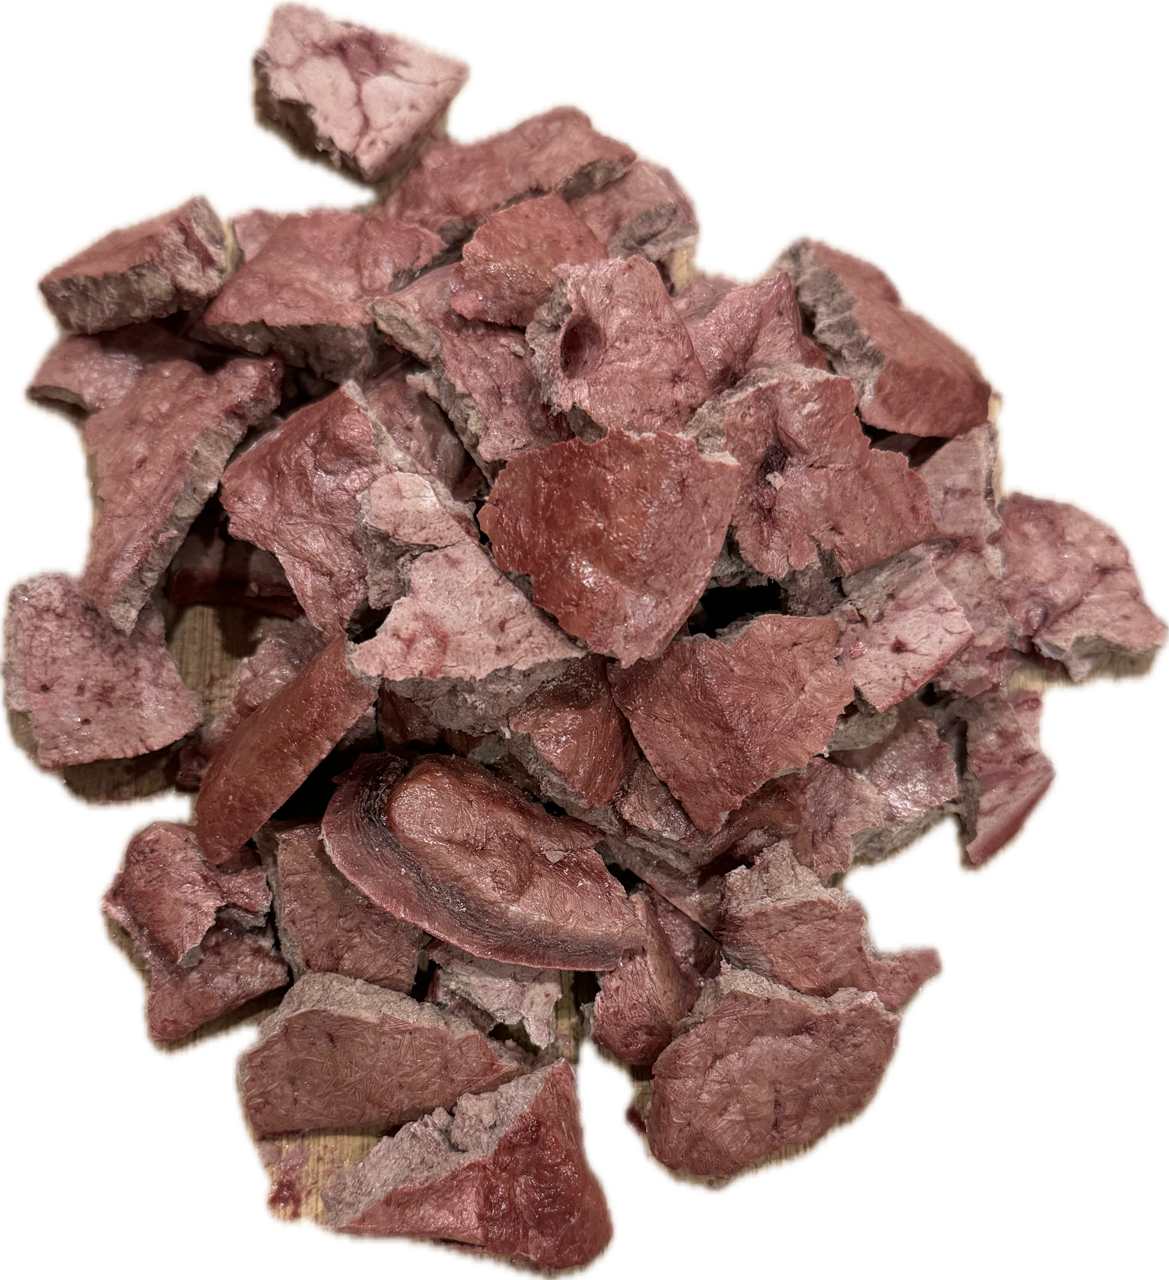 Freeze-dried Raw Beef Liver